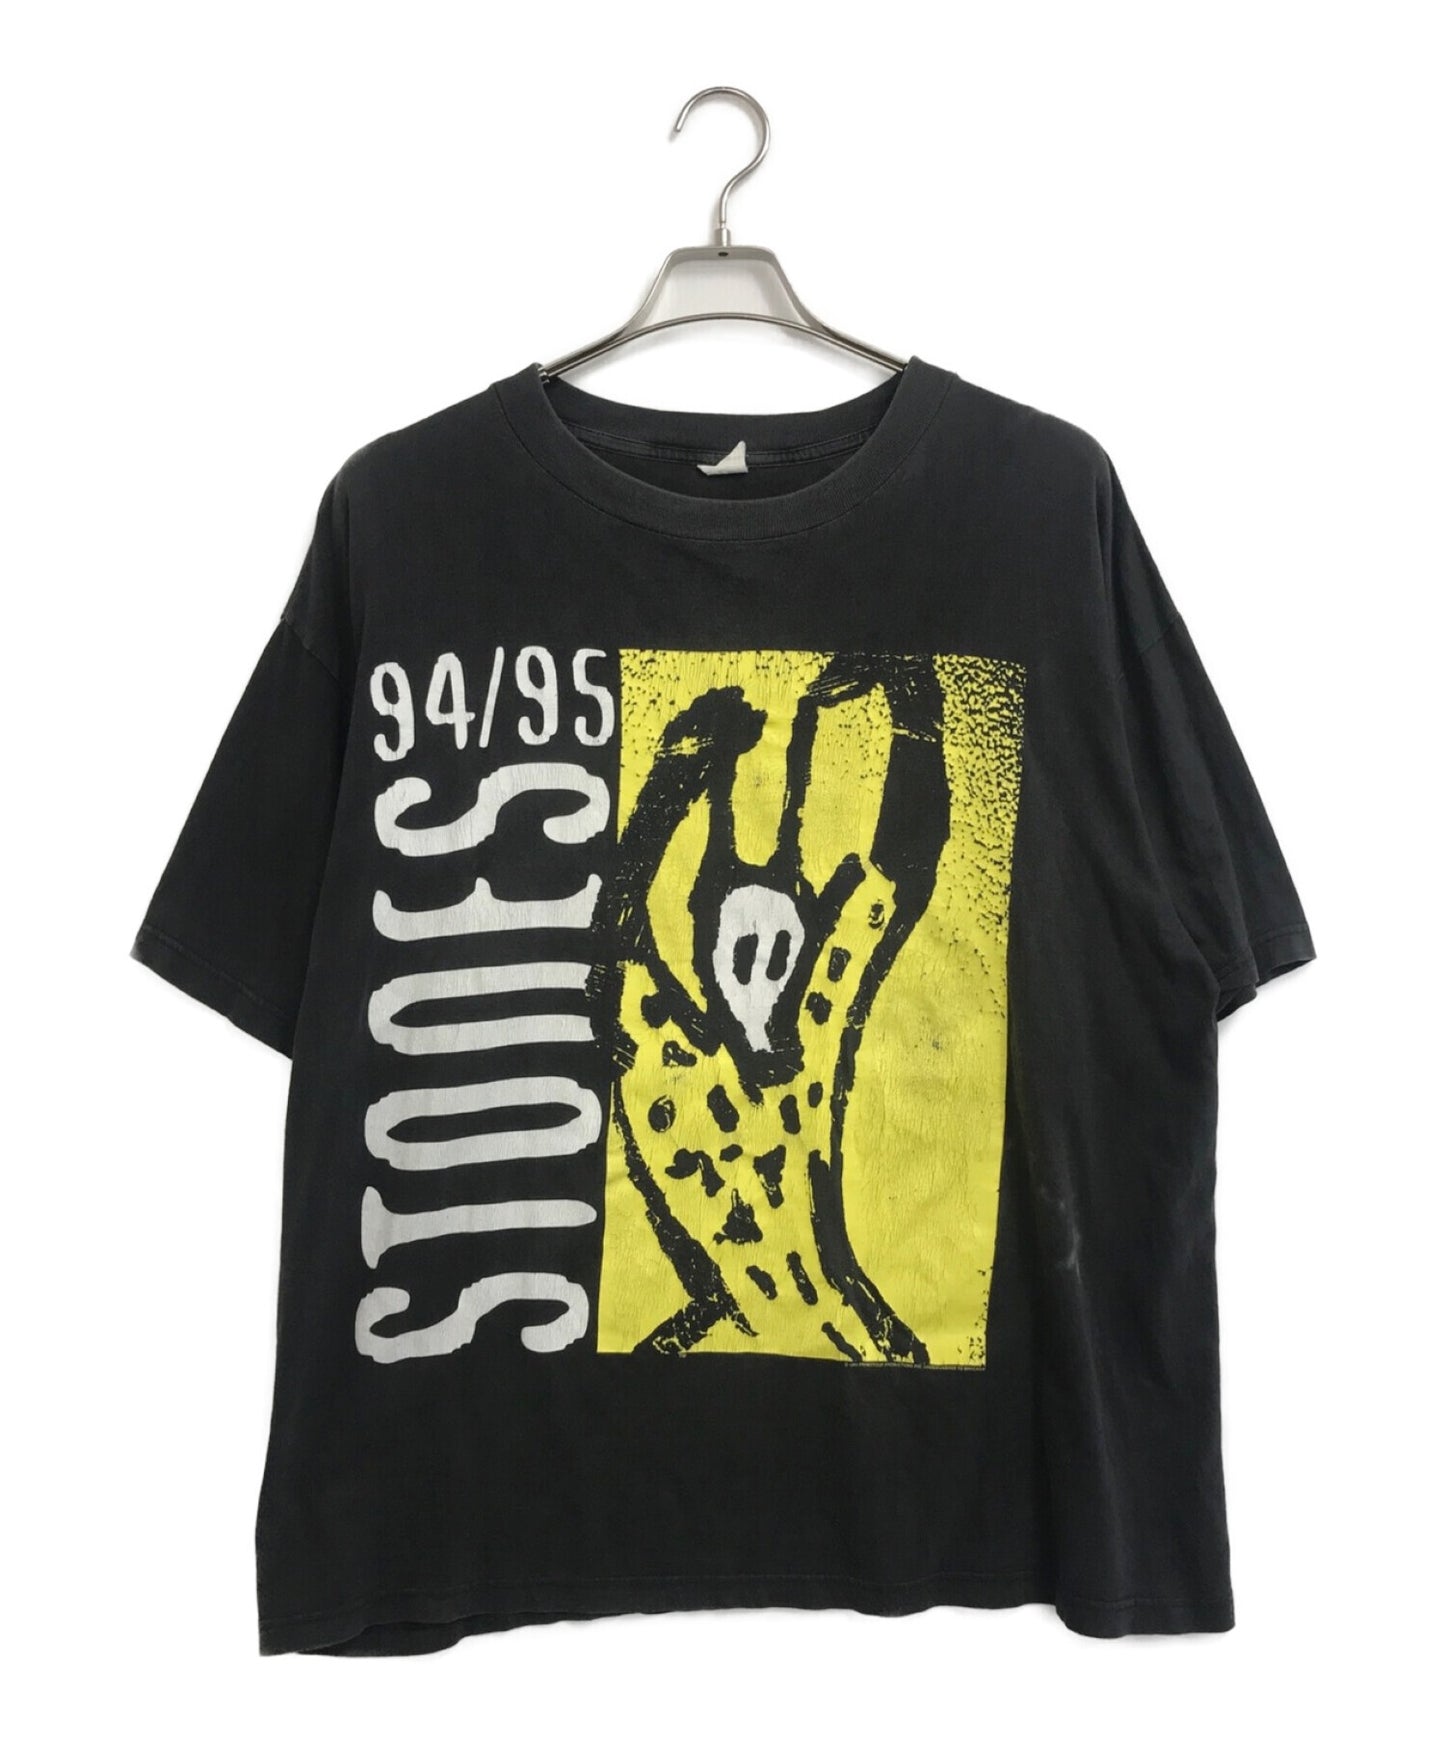 Rolling Stones Band T-Shirt Tour World Tour 94/95/95 ลิขสิทธิ์